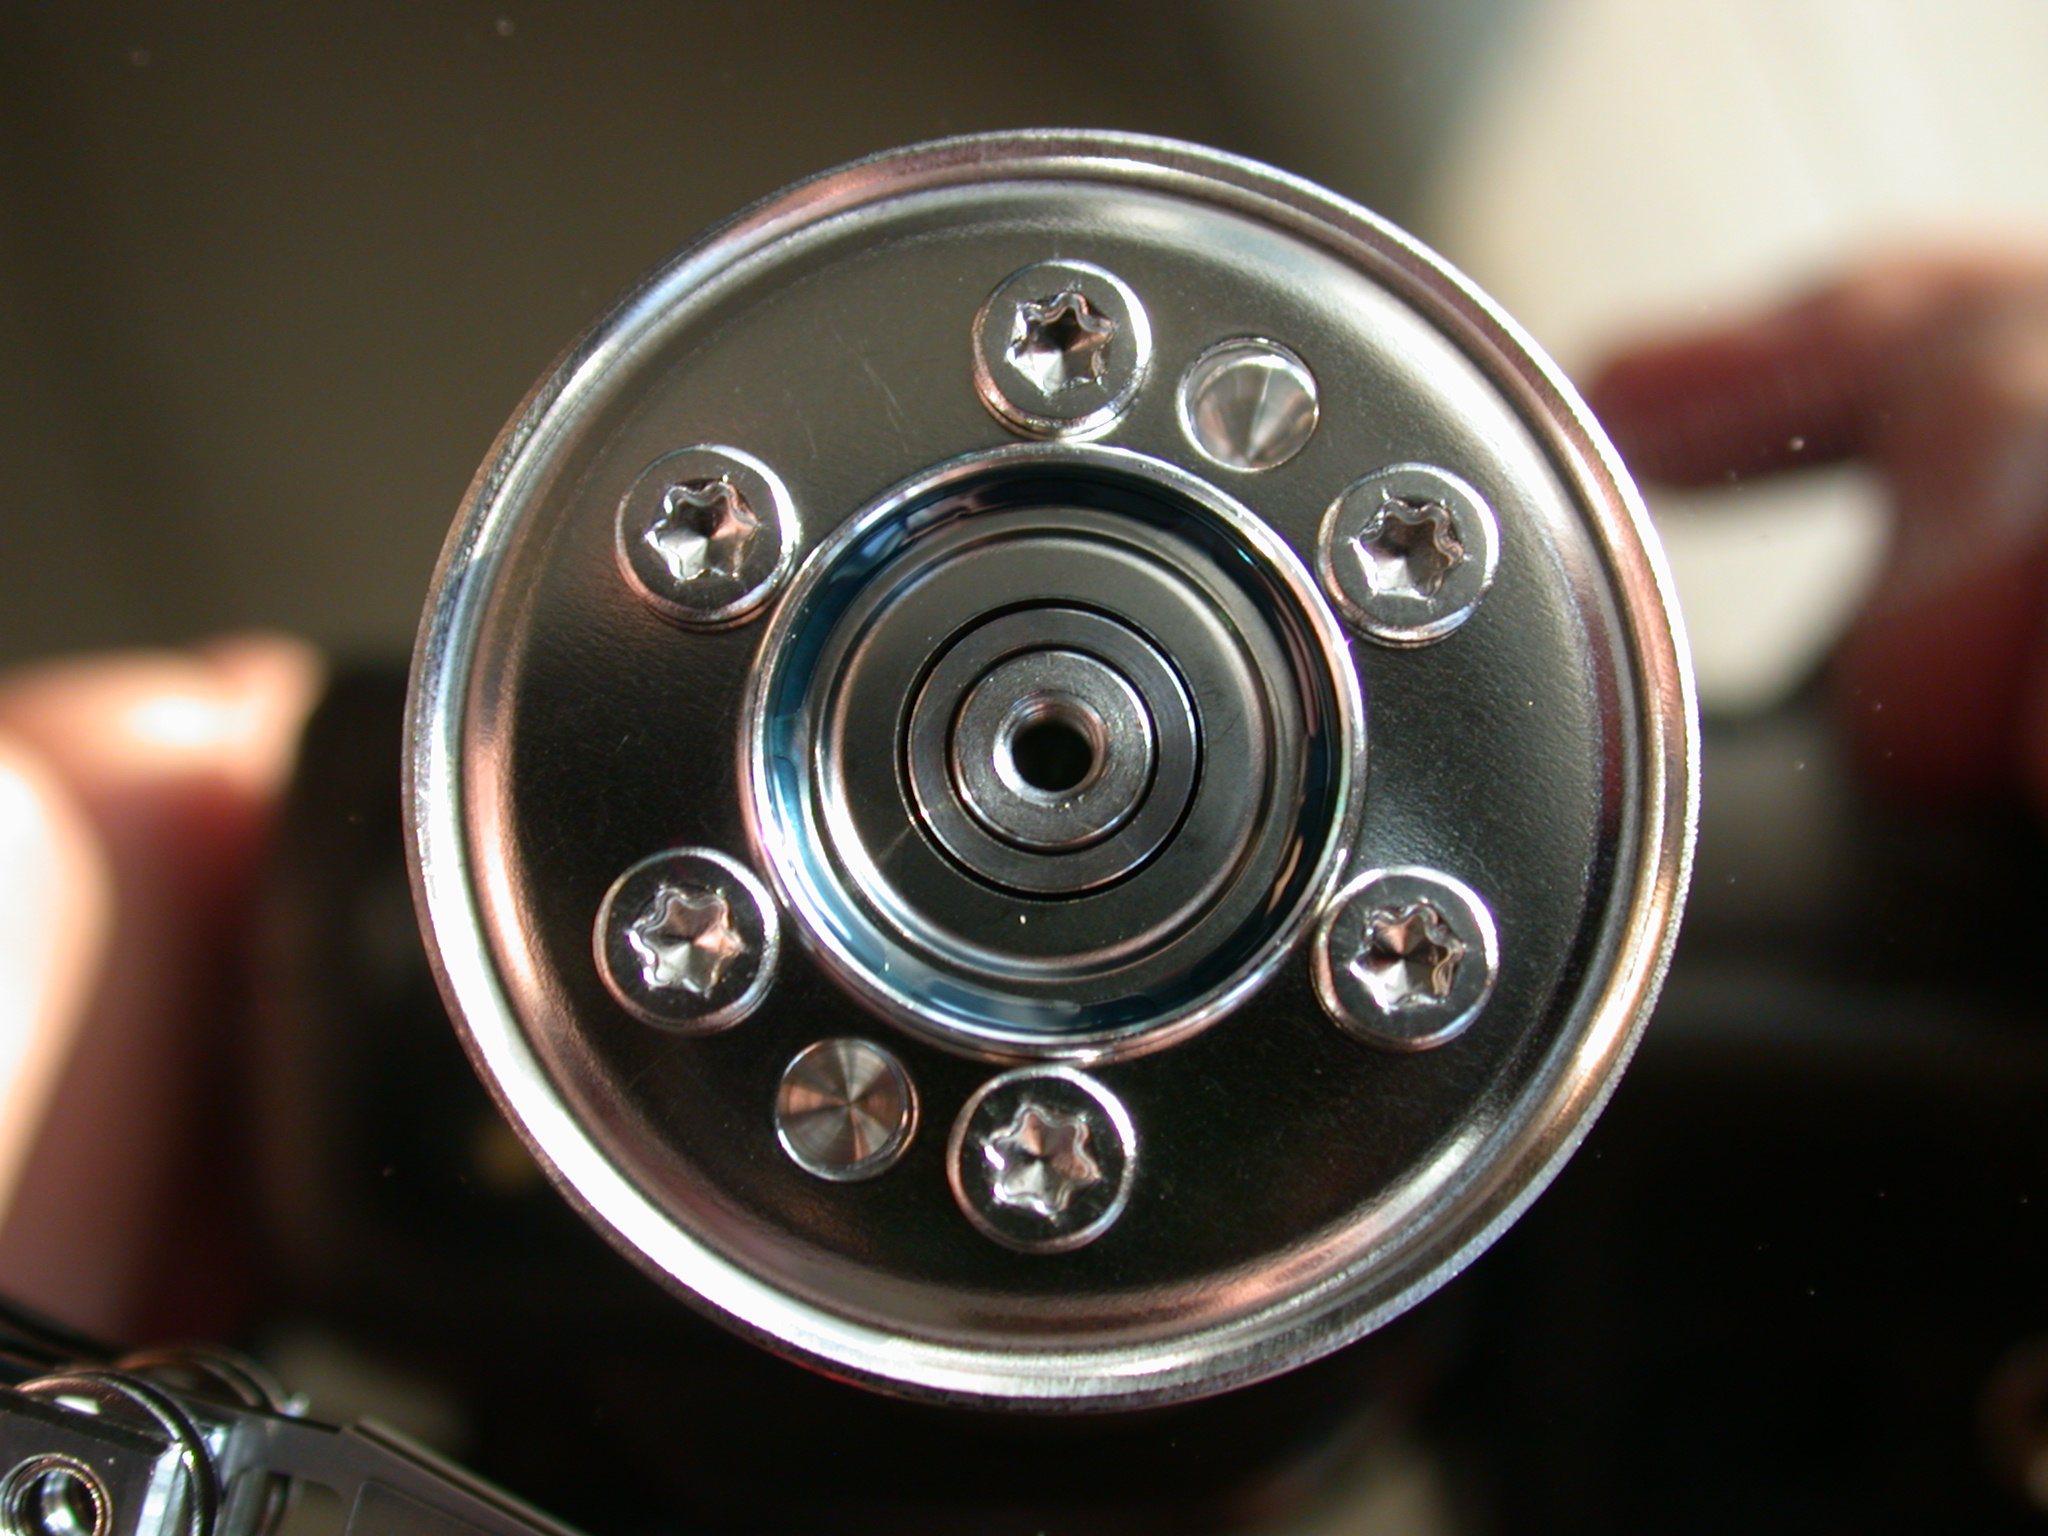 harddrive harddisc circle metal chrome torque bearing computer techno texture screw screws images